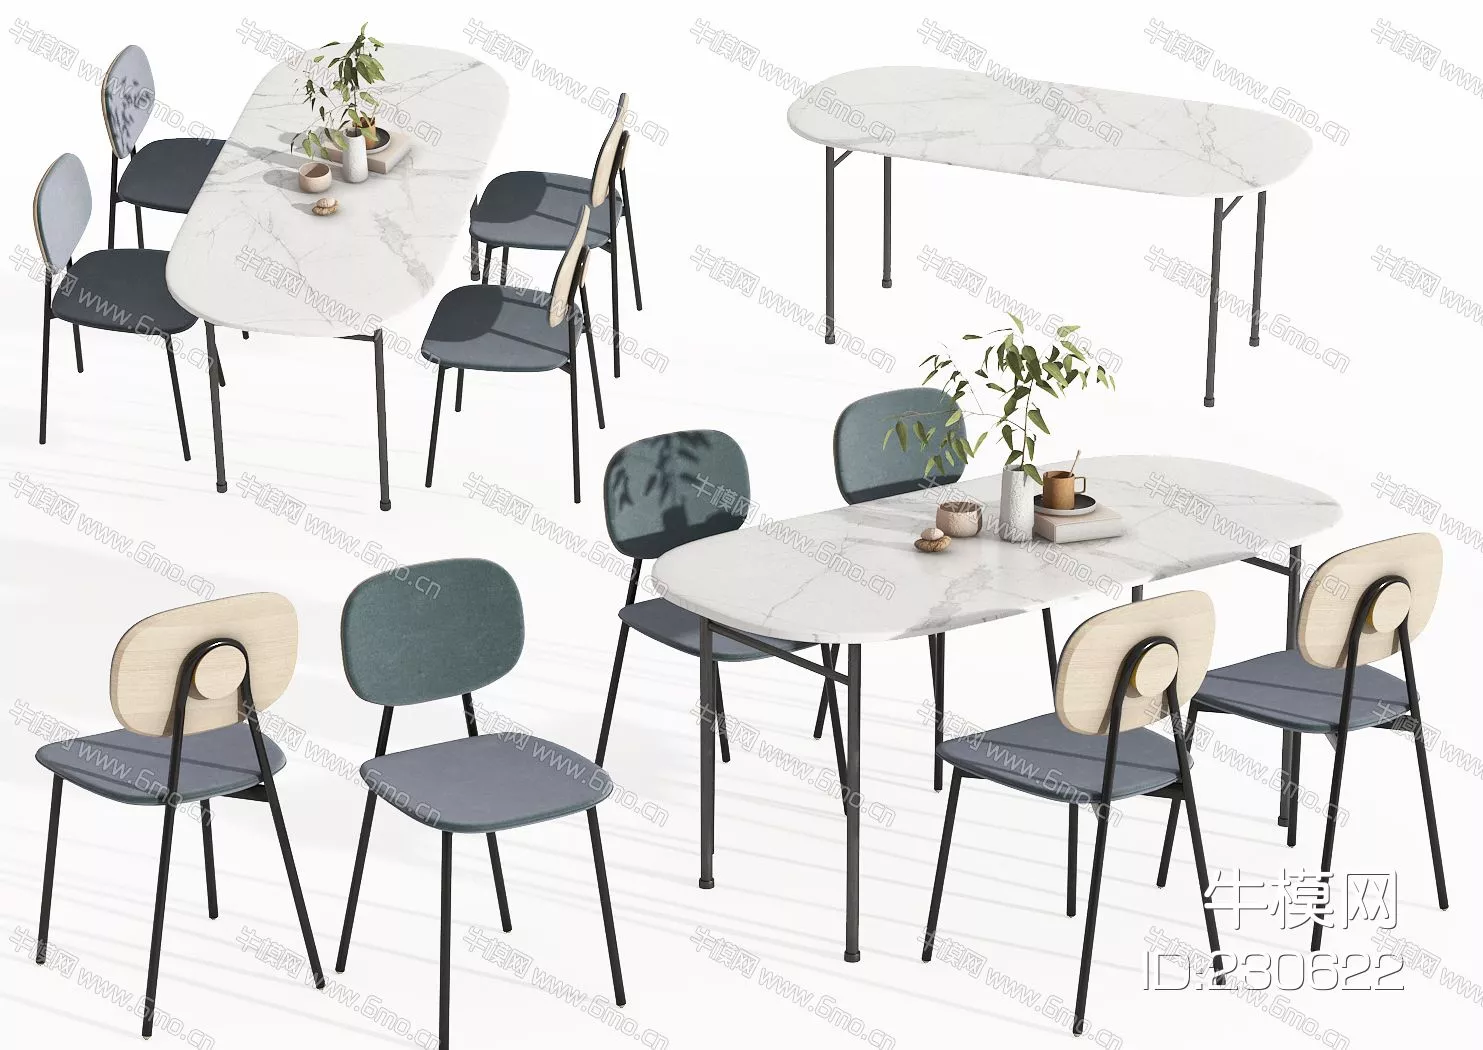 MODERN DINING TABLE SET - SKETCHUP 3D MODEL - VRAY - 230622